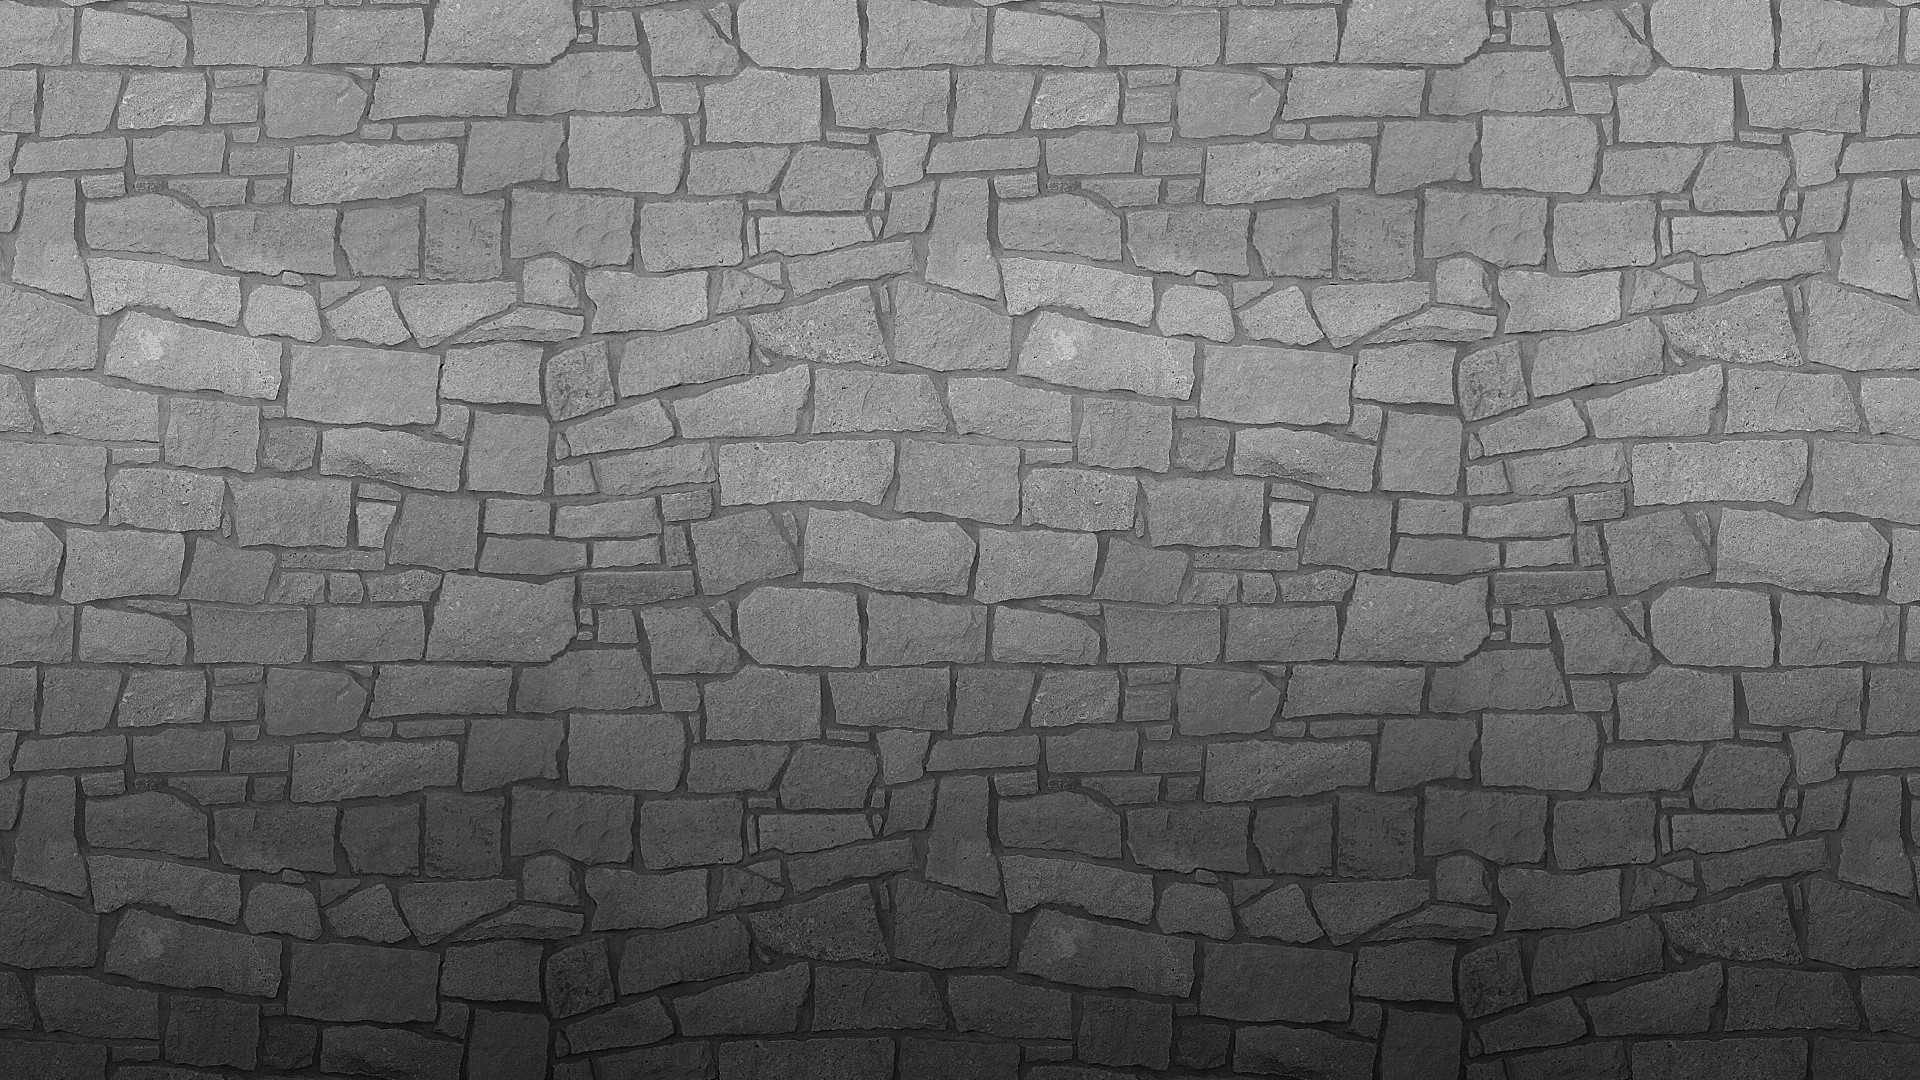 Texture Stone wallpaper photo hd